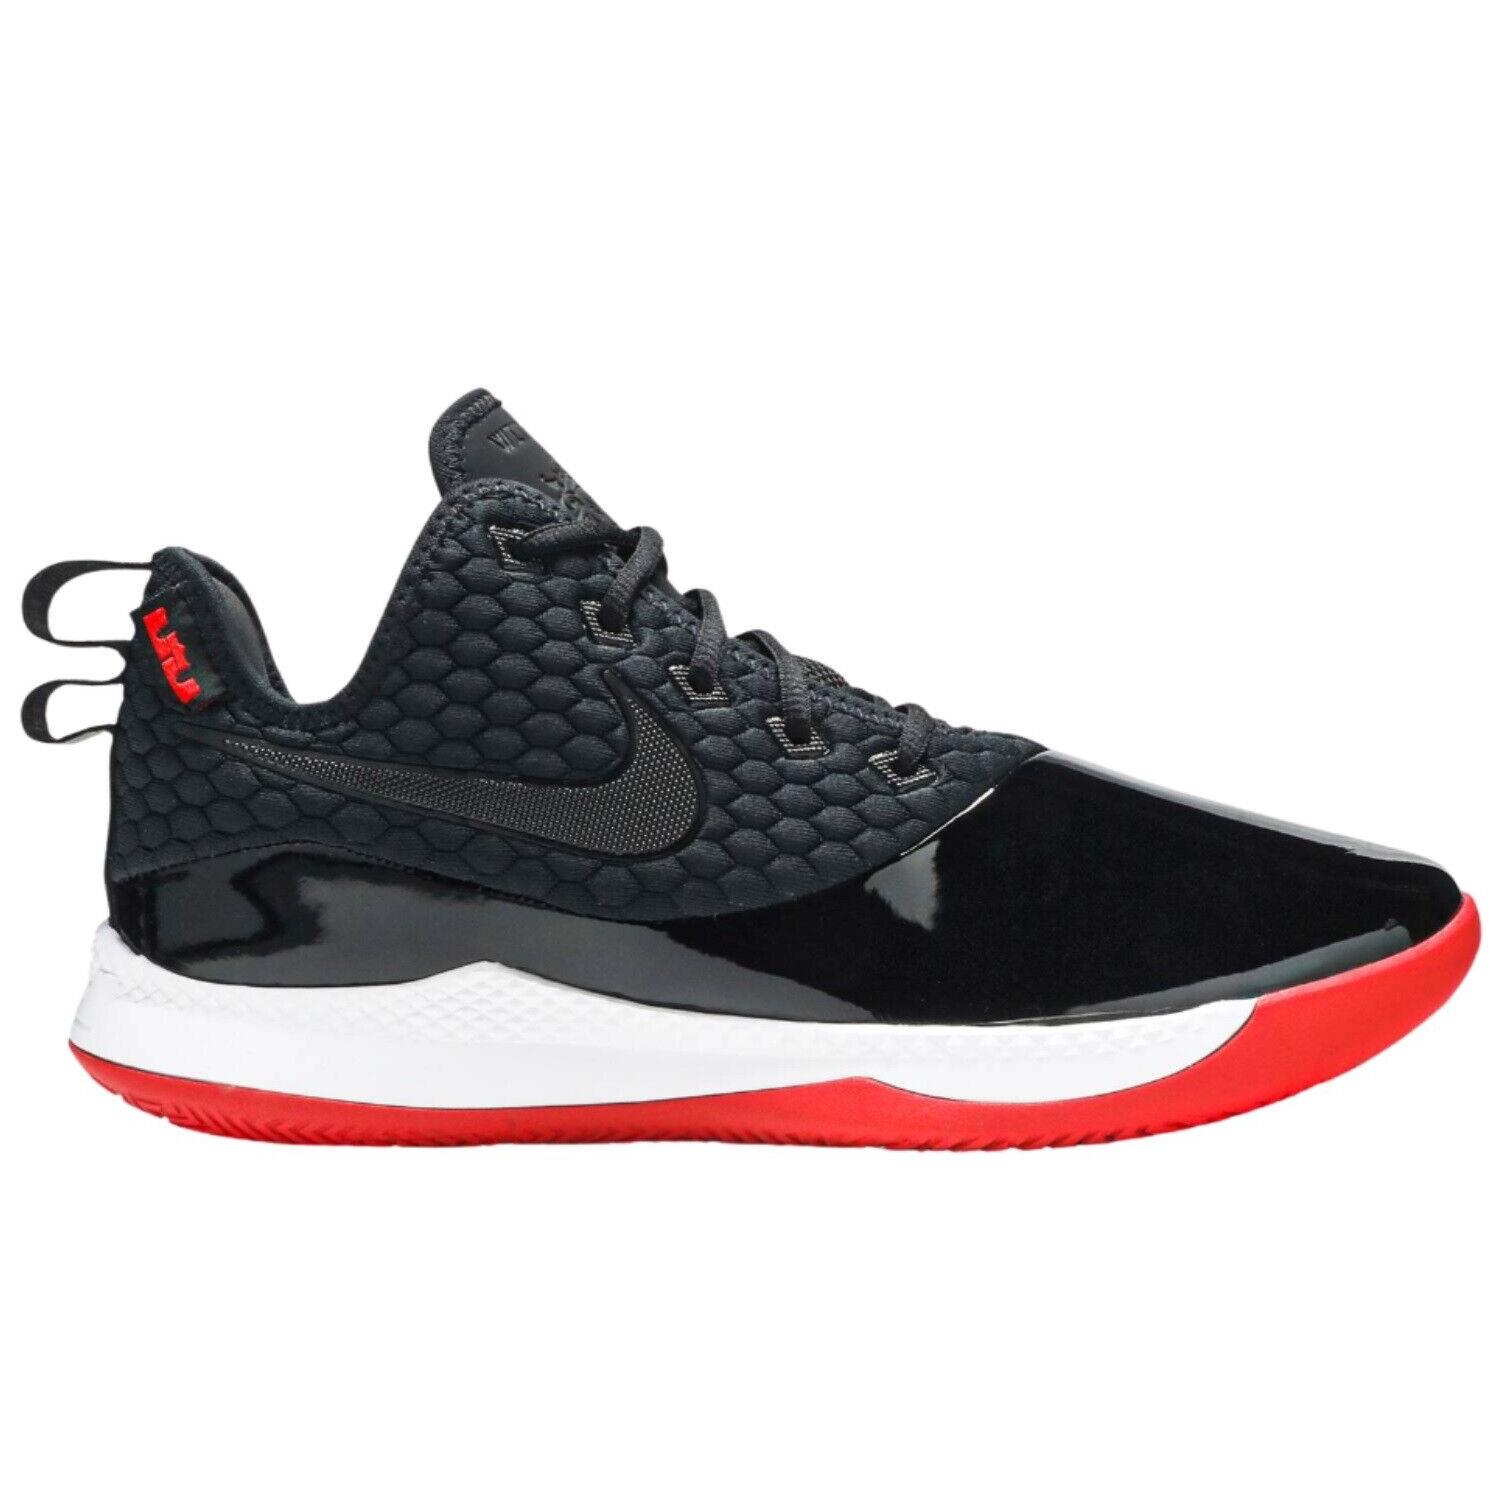 Nike Lebron Witness 3 Prem Mens BQ9819-001 Black Red Basketball Shoes Size 12.5 - Black/Black-White-University Red